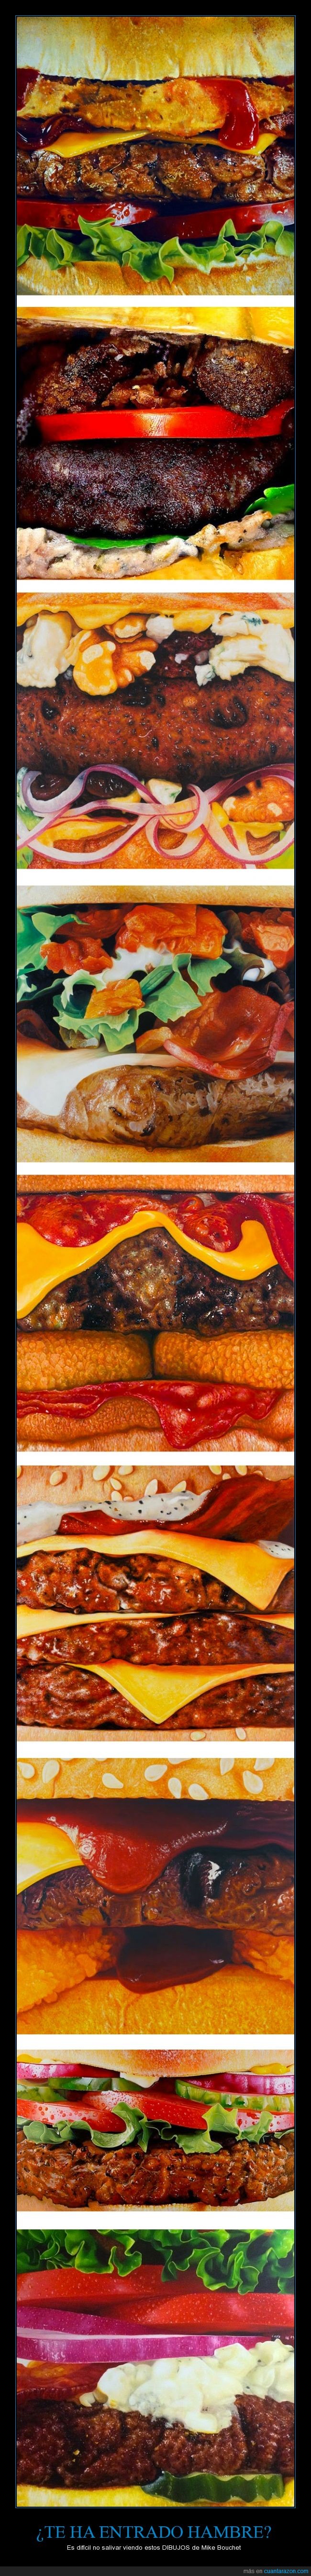 Mike Bouchet,dibujo,hiperrealista,hiperrealismo,ilustracion,hamburguesa,burguer,burger